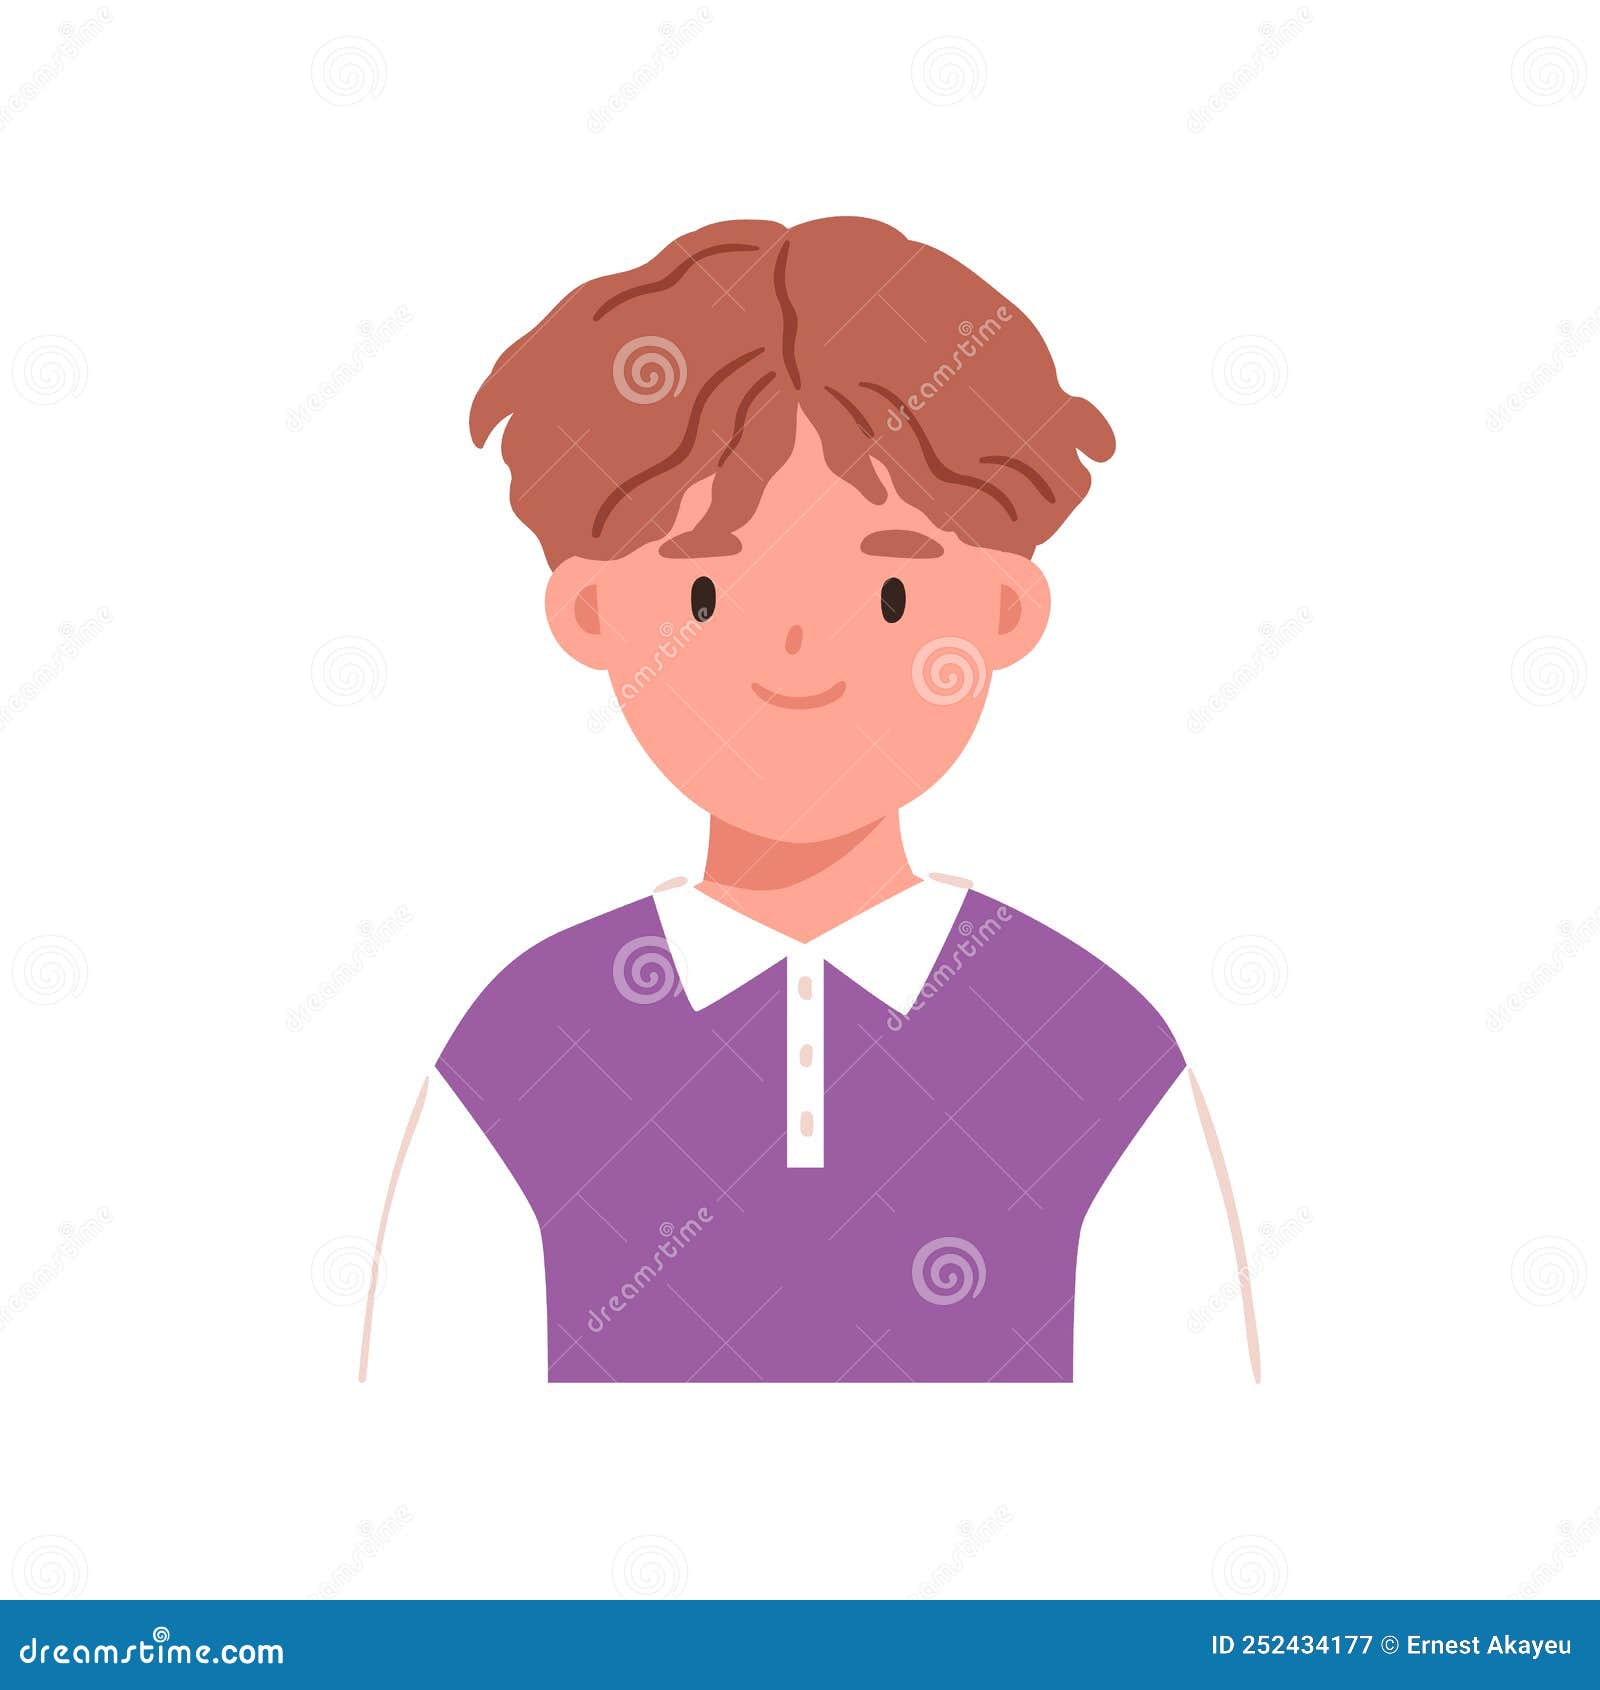 boy child head portrait. school kid face avatar. happy smiling schoolboy, little student. cute adorable schoolkid with